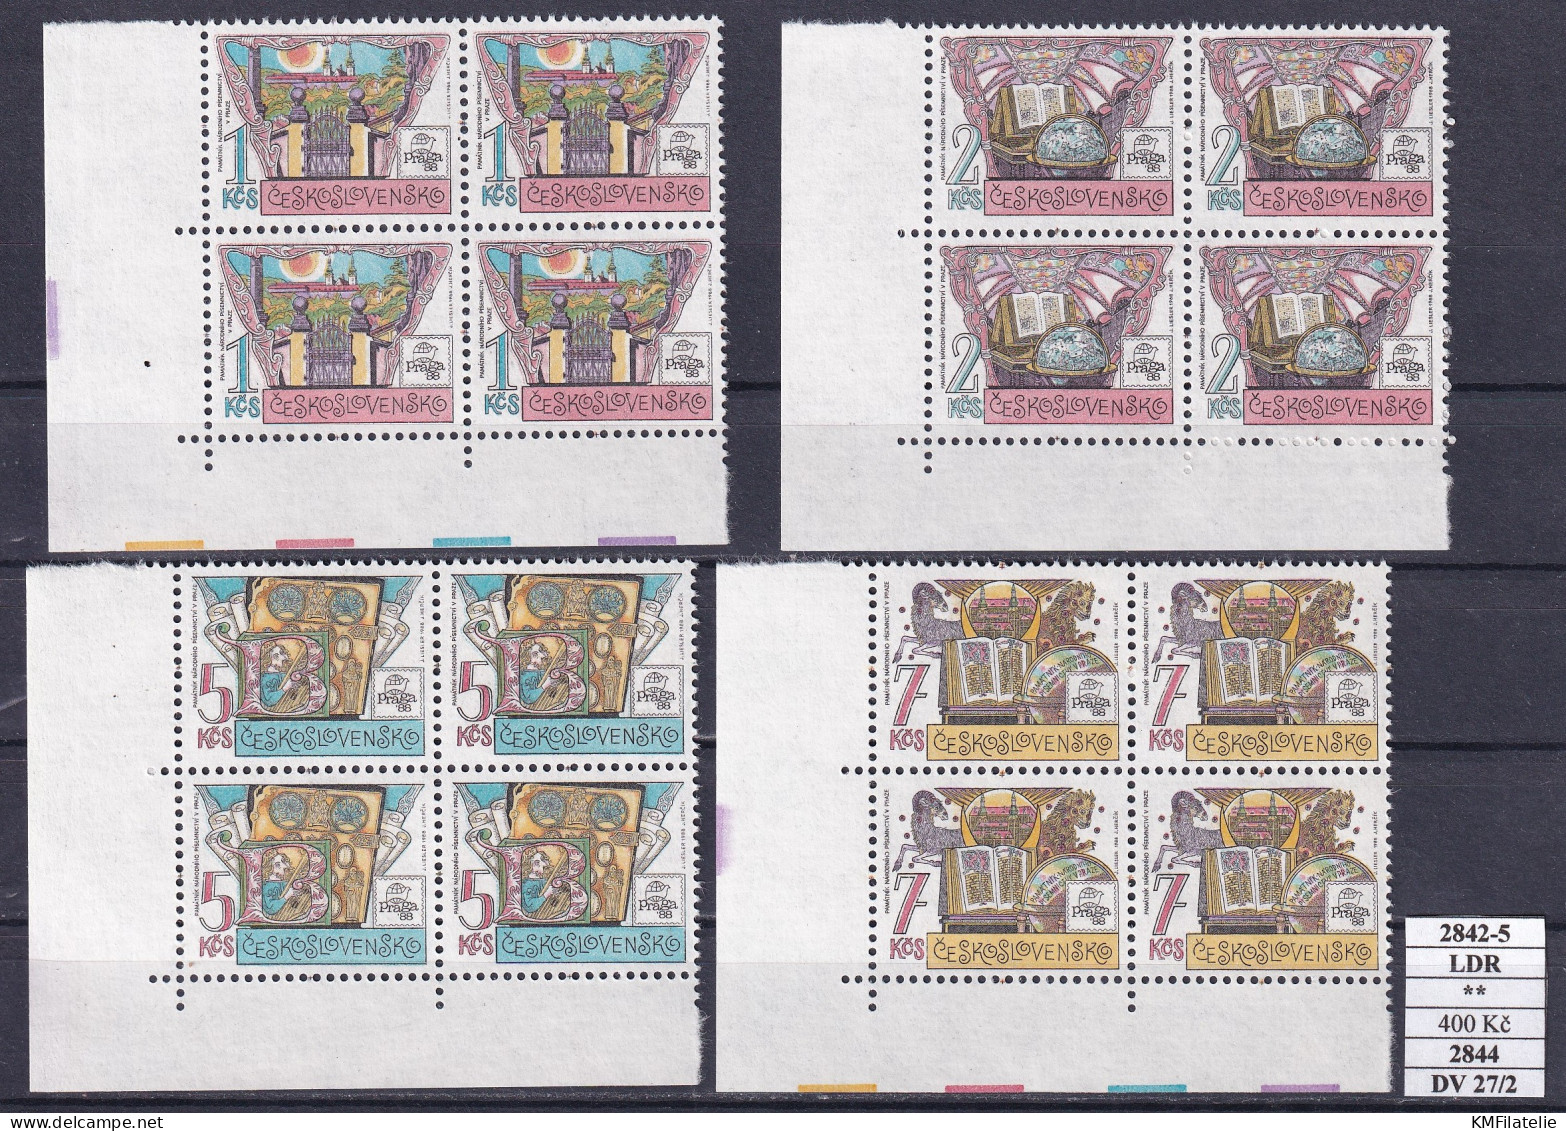 Czechoslovakia Pofis 2842-5 LDR 2844 DV 27/2 MNH - Unused Stamps